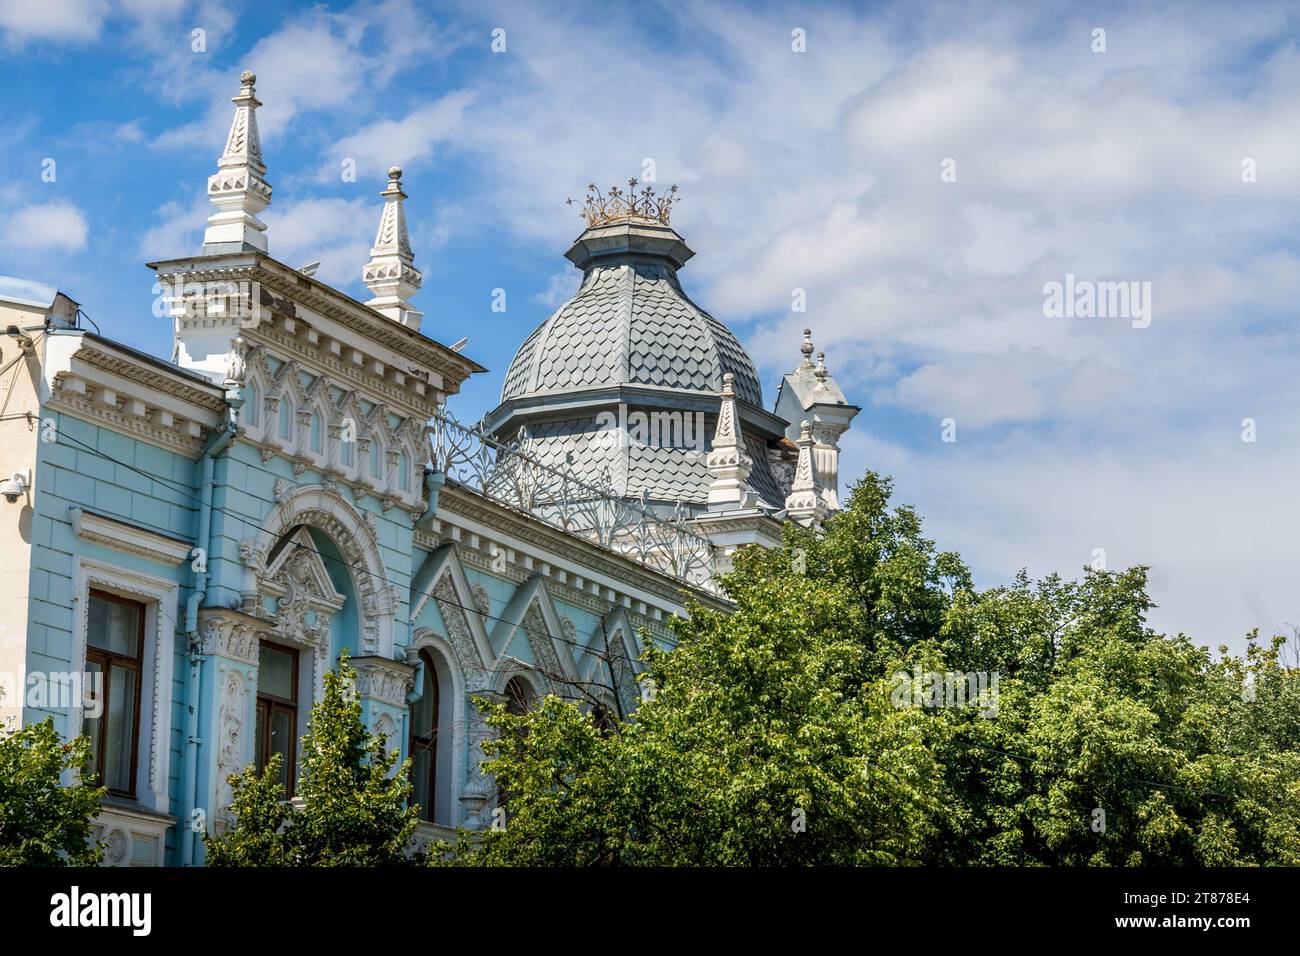 The beautiful facade of old historic building in Krasnodar, the capital of Krasnodar krai, a southern Russia region on the border with Ukraine. Stock Photo